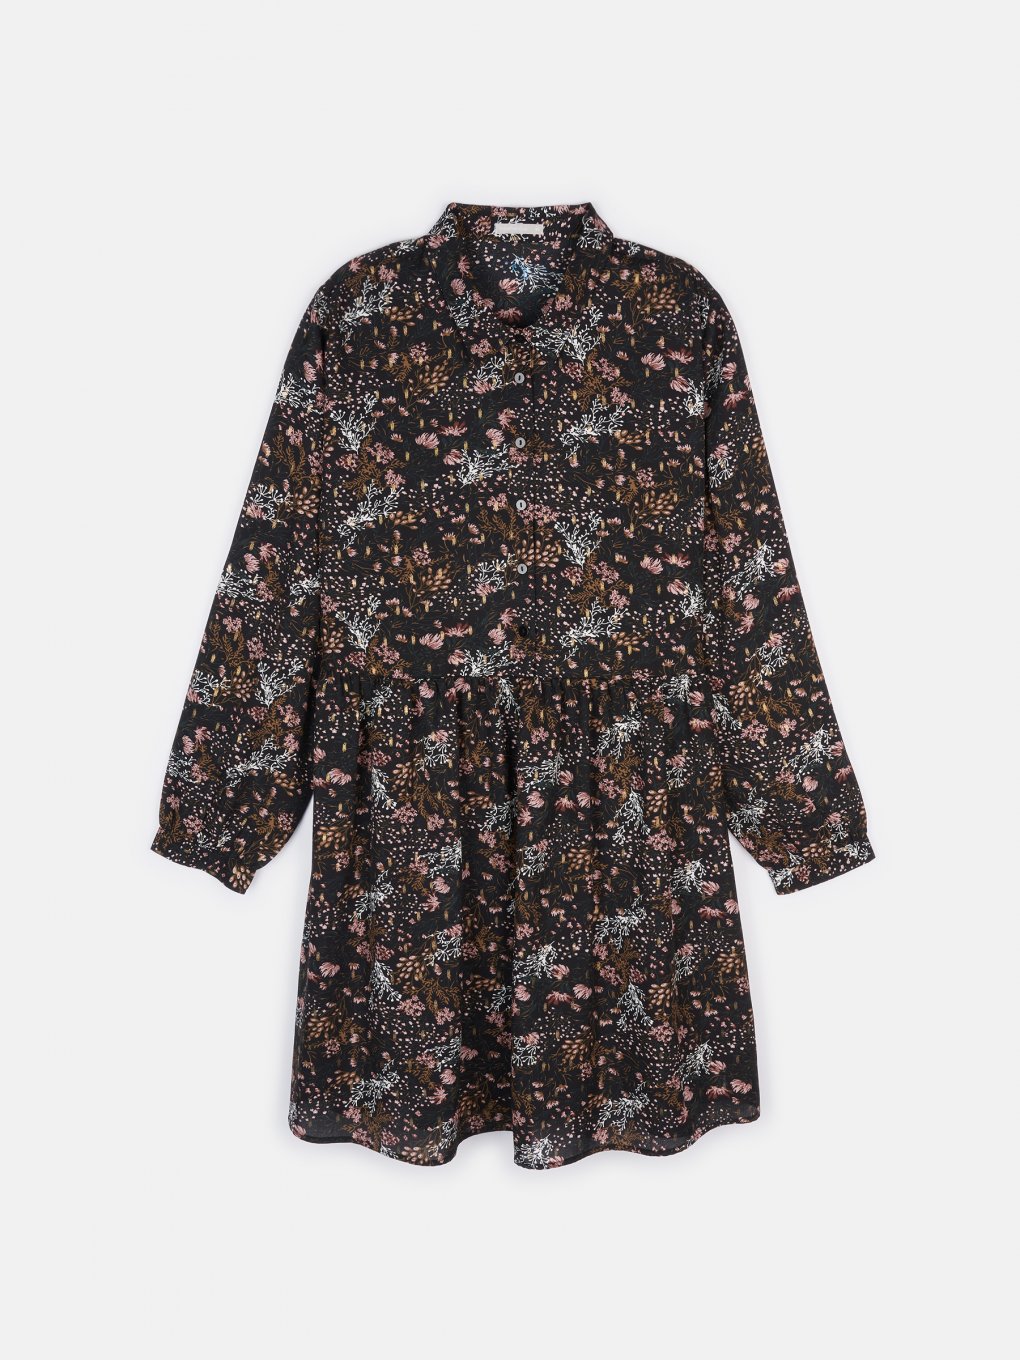 Plus size floral print shirt dress